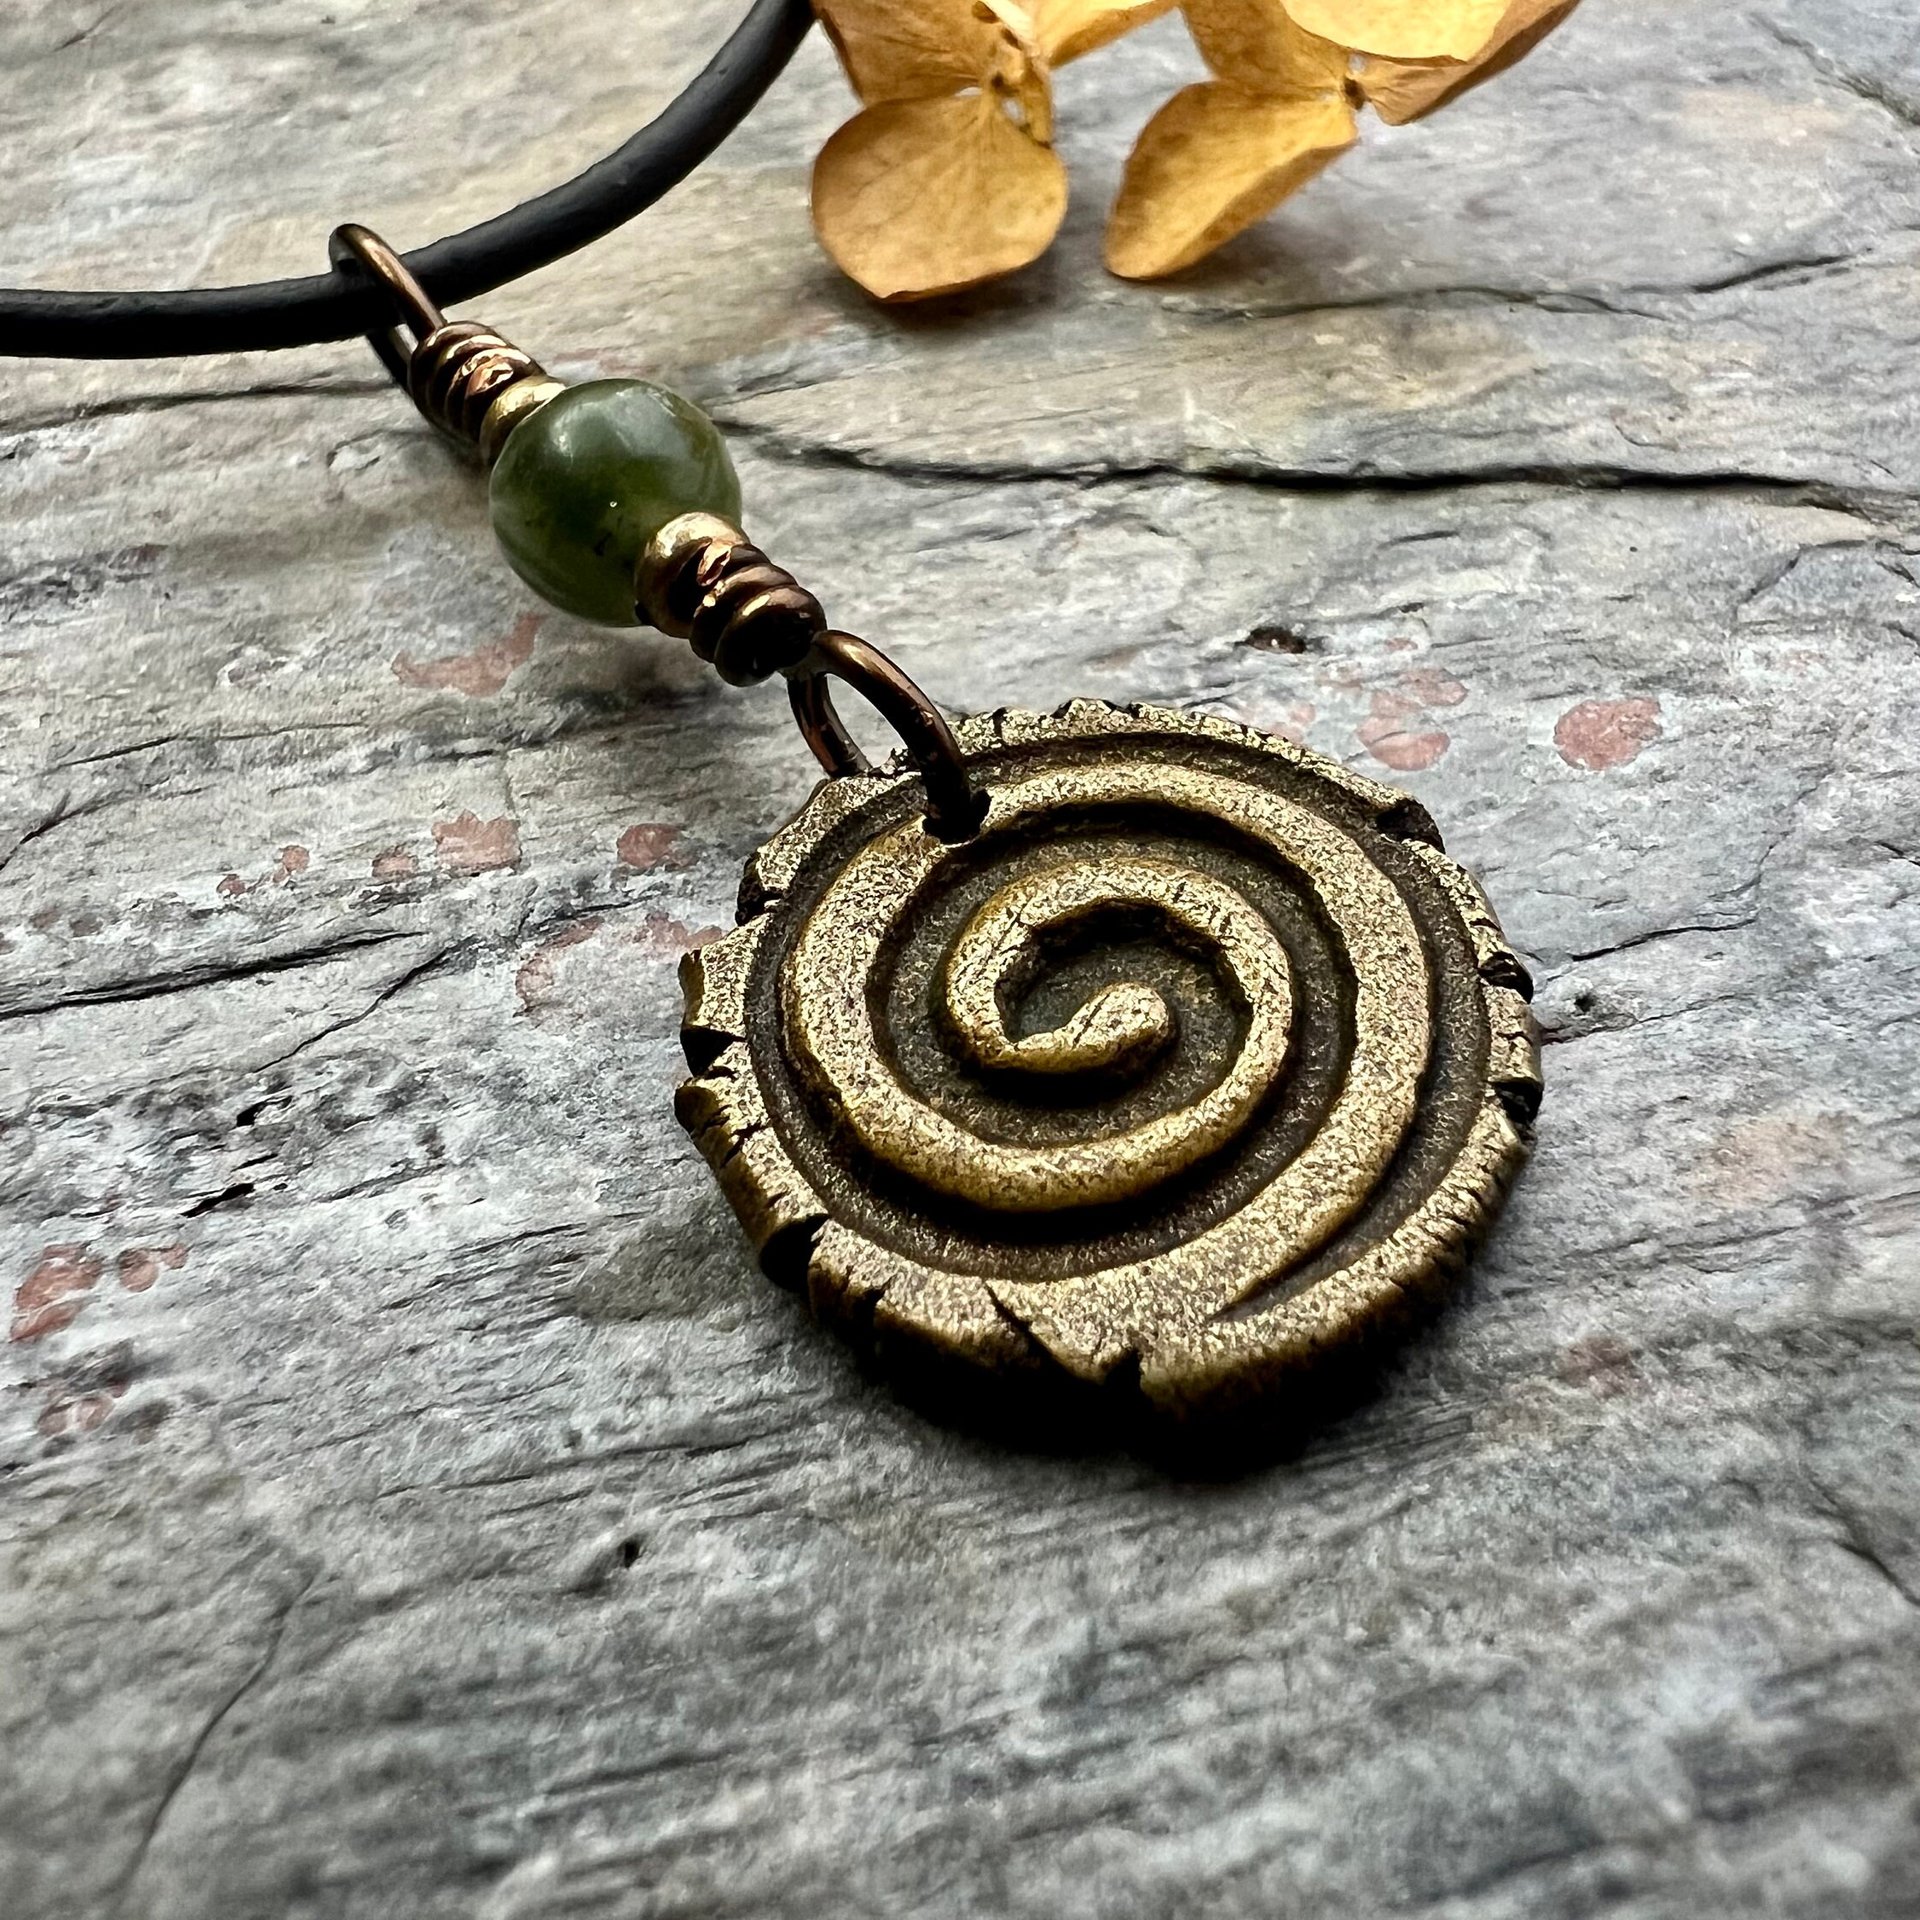 Shamrock Clover Charm, Bronze Wax Seal Charm, Connemara Marble, Irish Celtic Jewelry, Leather & Vegan Cords, Handmade, Soul Harbor Jewelry